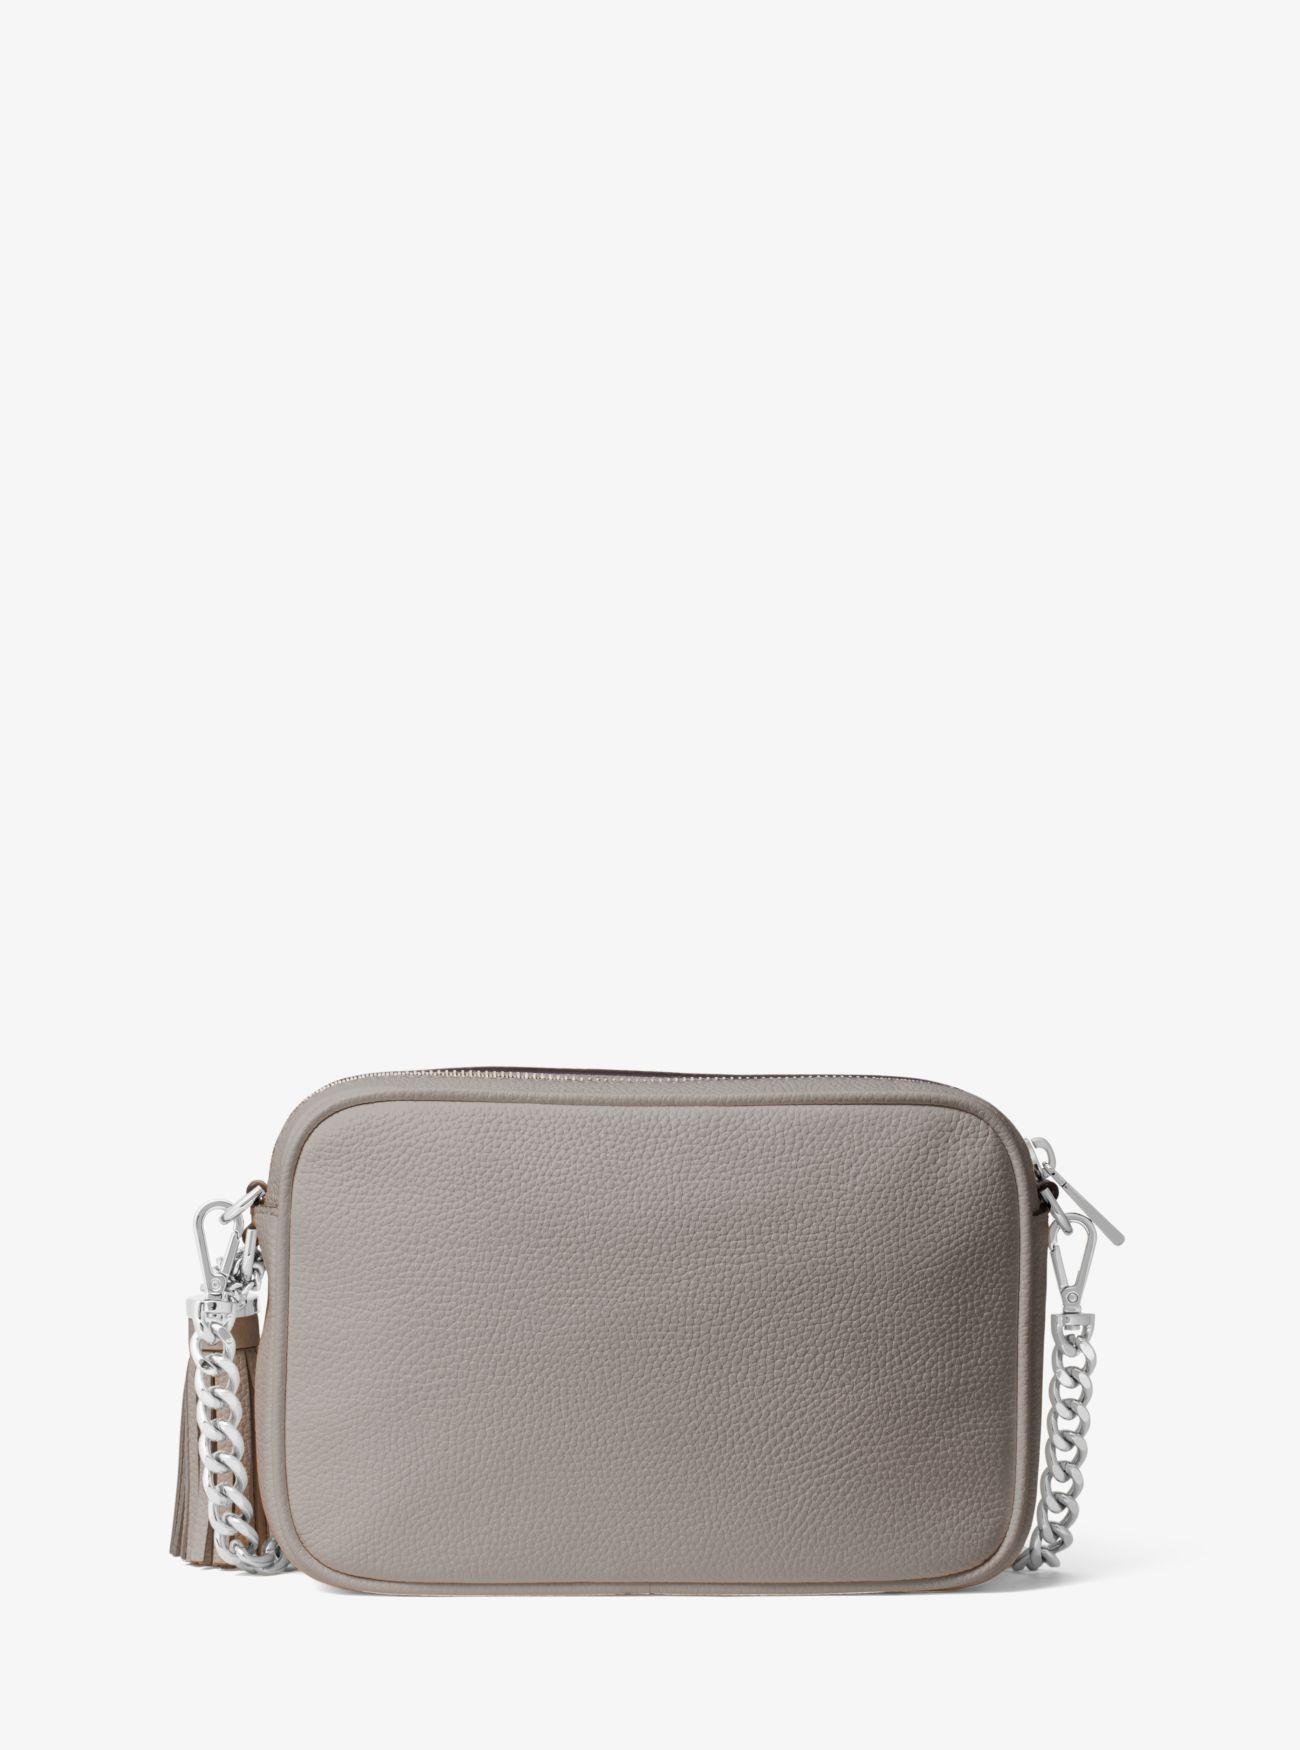 Michael Kors Ginny Leather Crossbody Bag in Pearl Grey (Gray) - Lyst